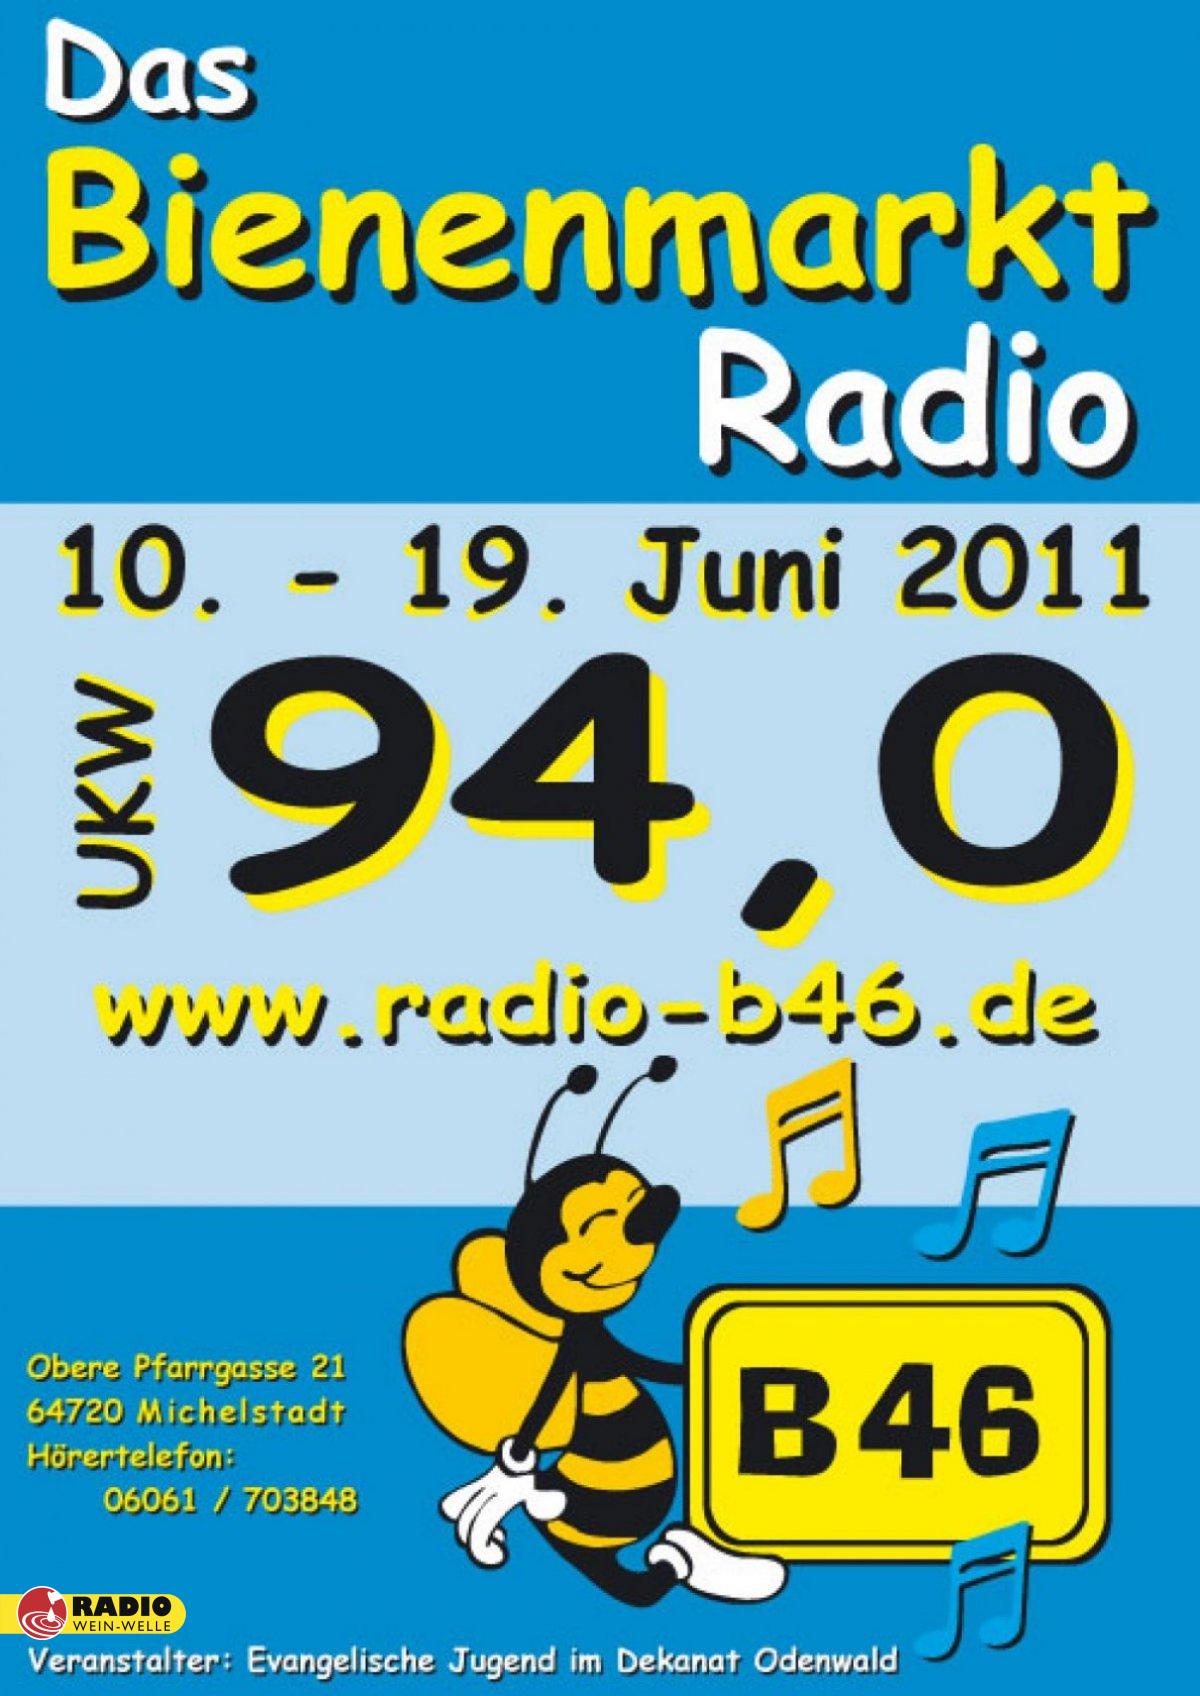 Partnerradio B46 on Air &amp; RWW bei Facebook